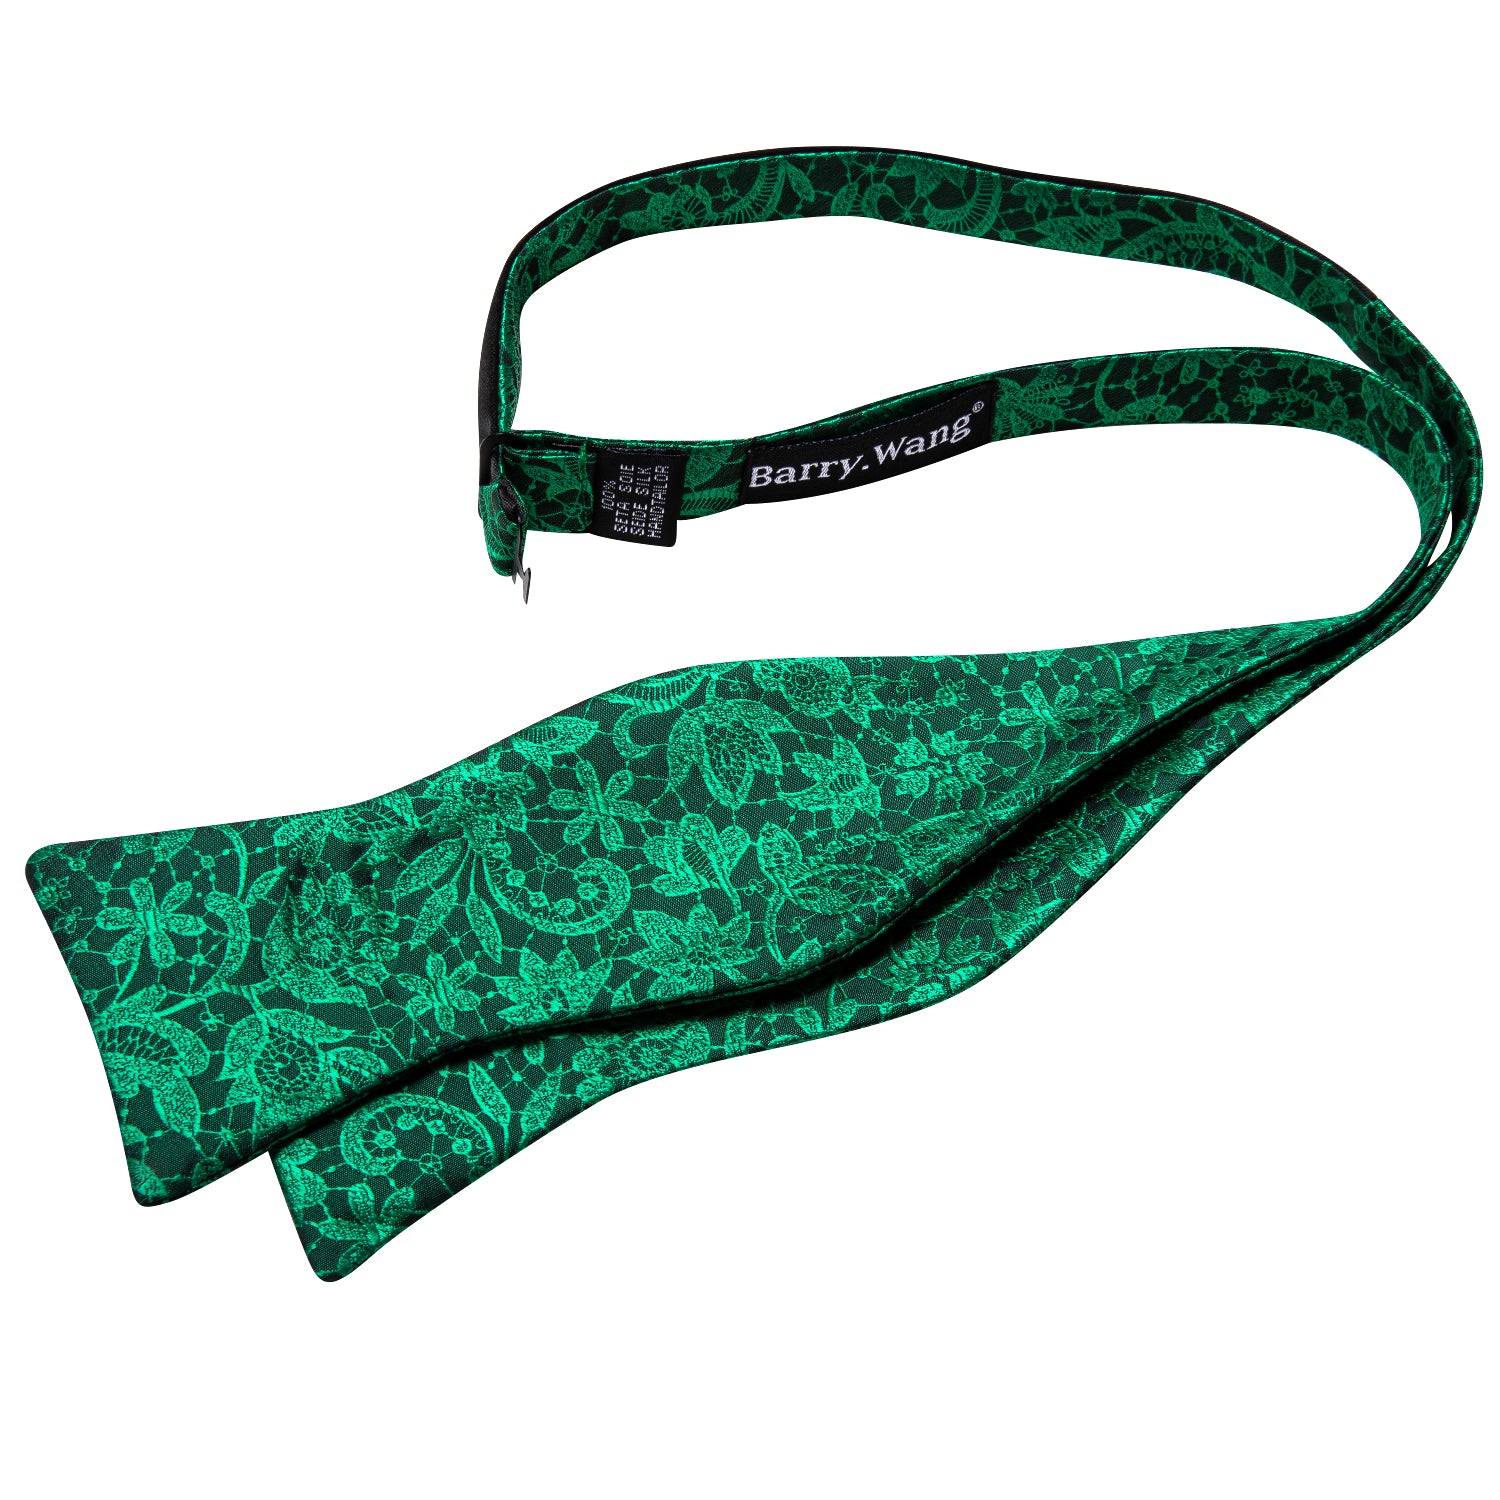 Green Floral Self Tie Bow Tie Hanky Cufflinks Set